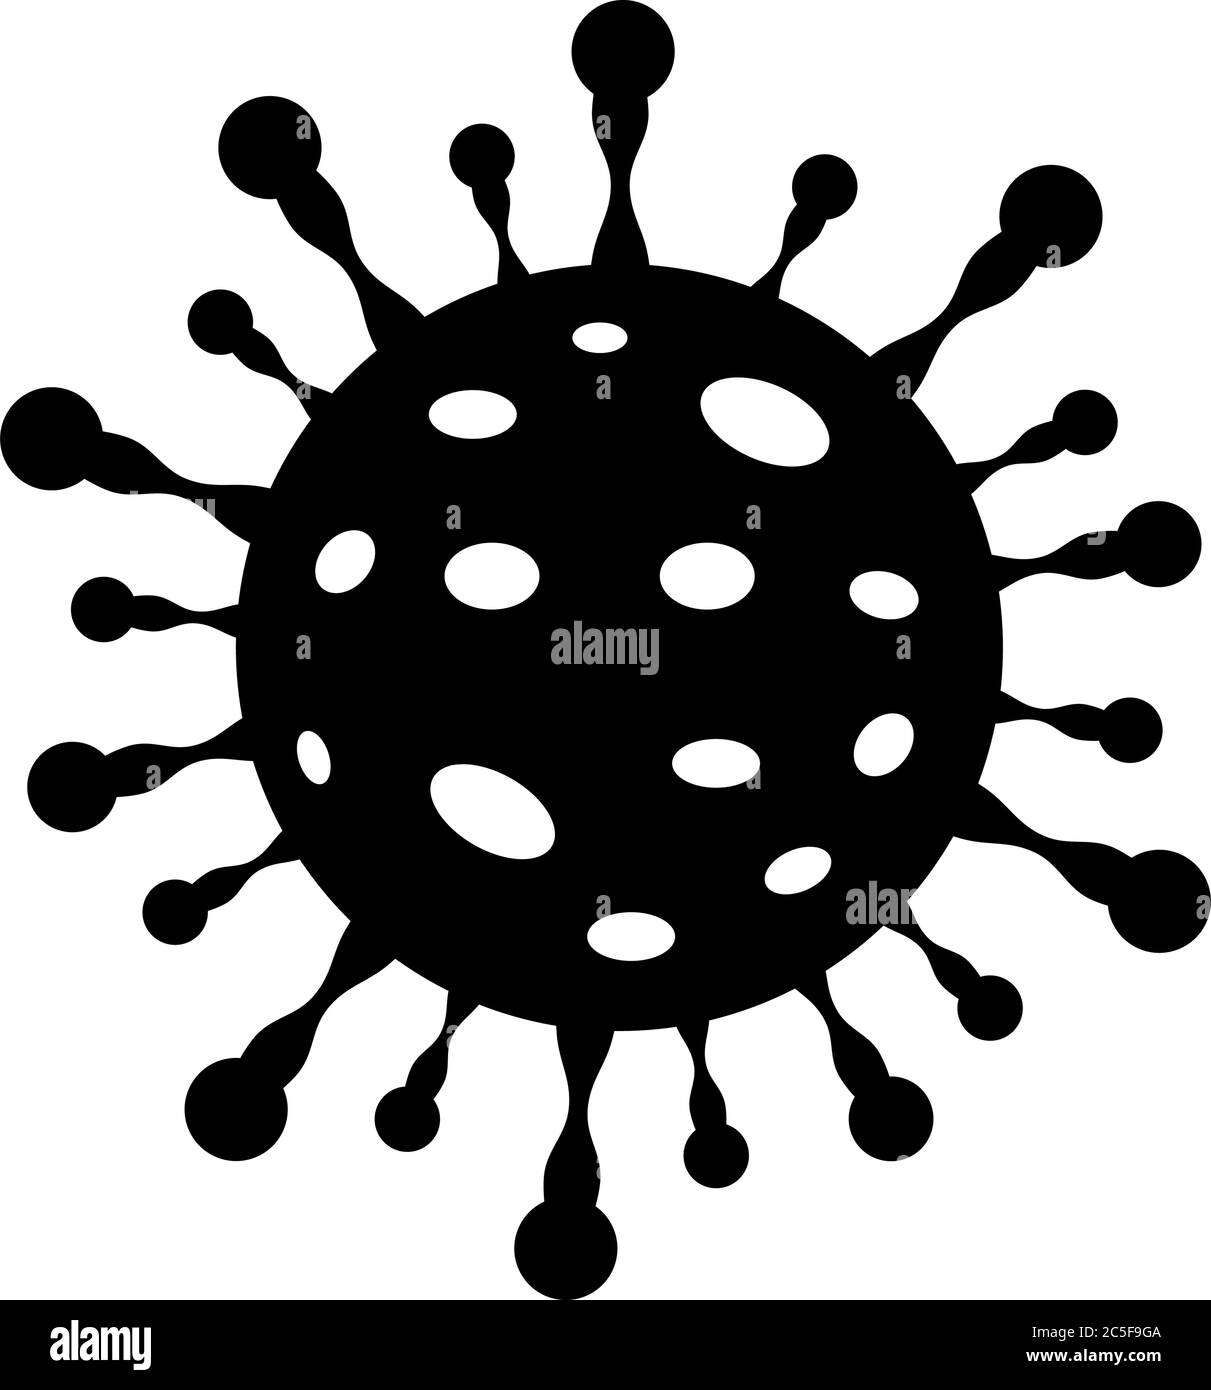 Coronavirus icon outbreak dangerous corona flu strain pandemic medical health risk concept vector illustration Stock Vector